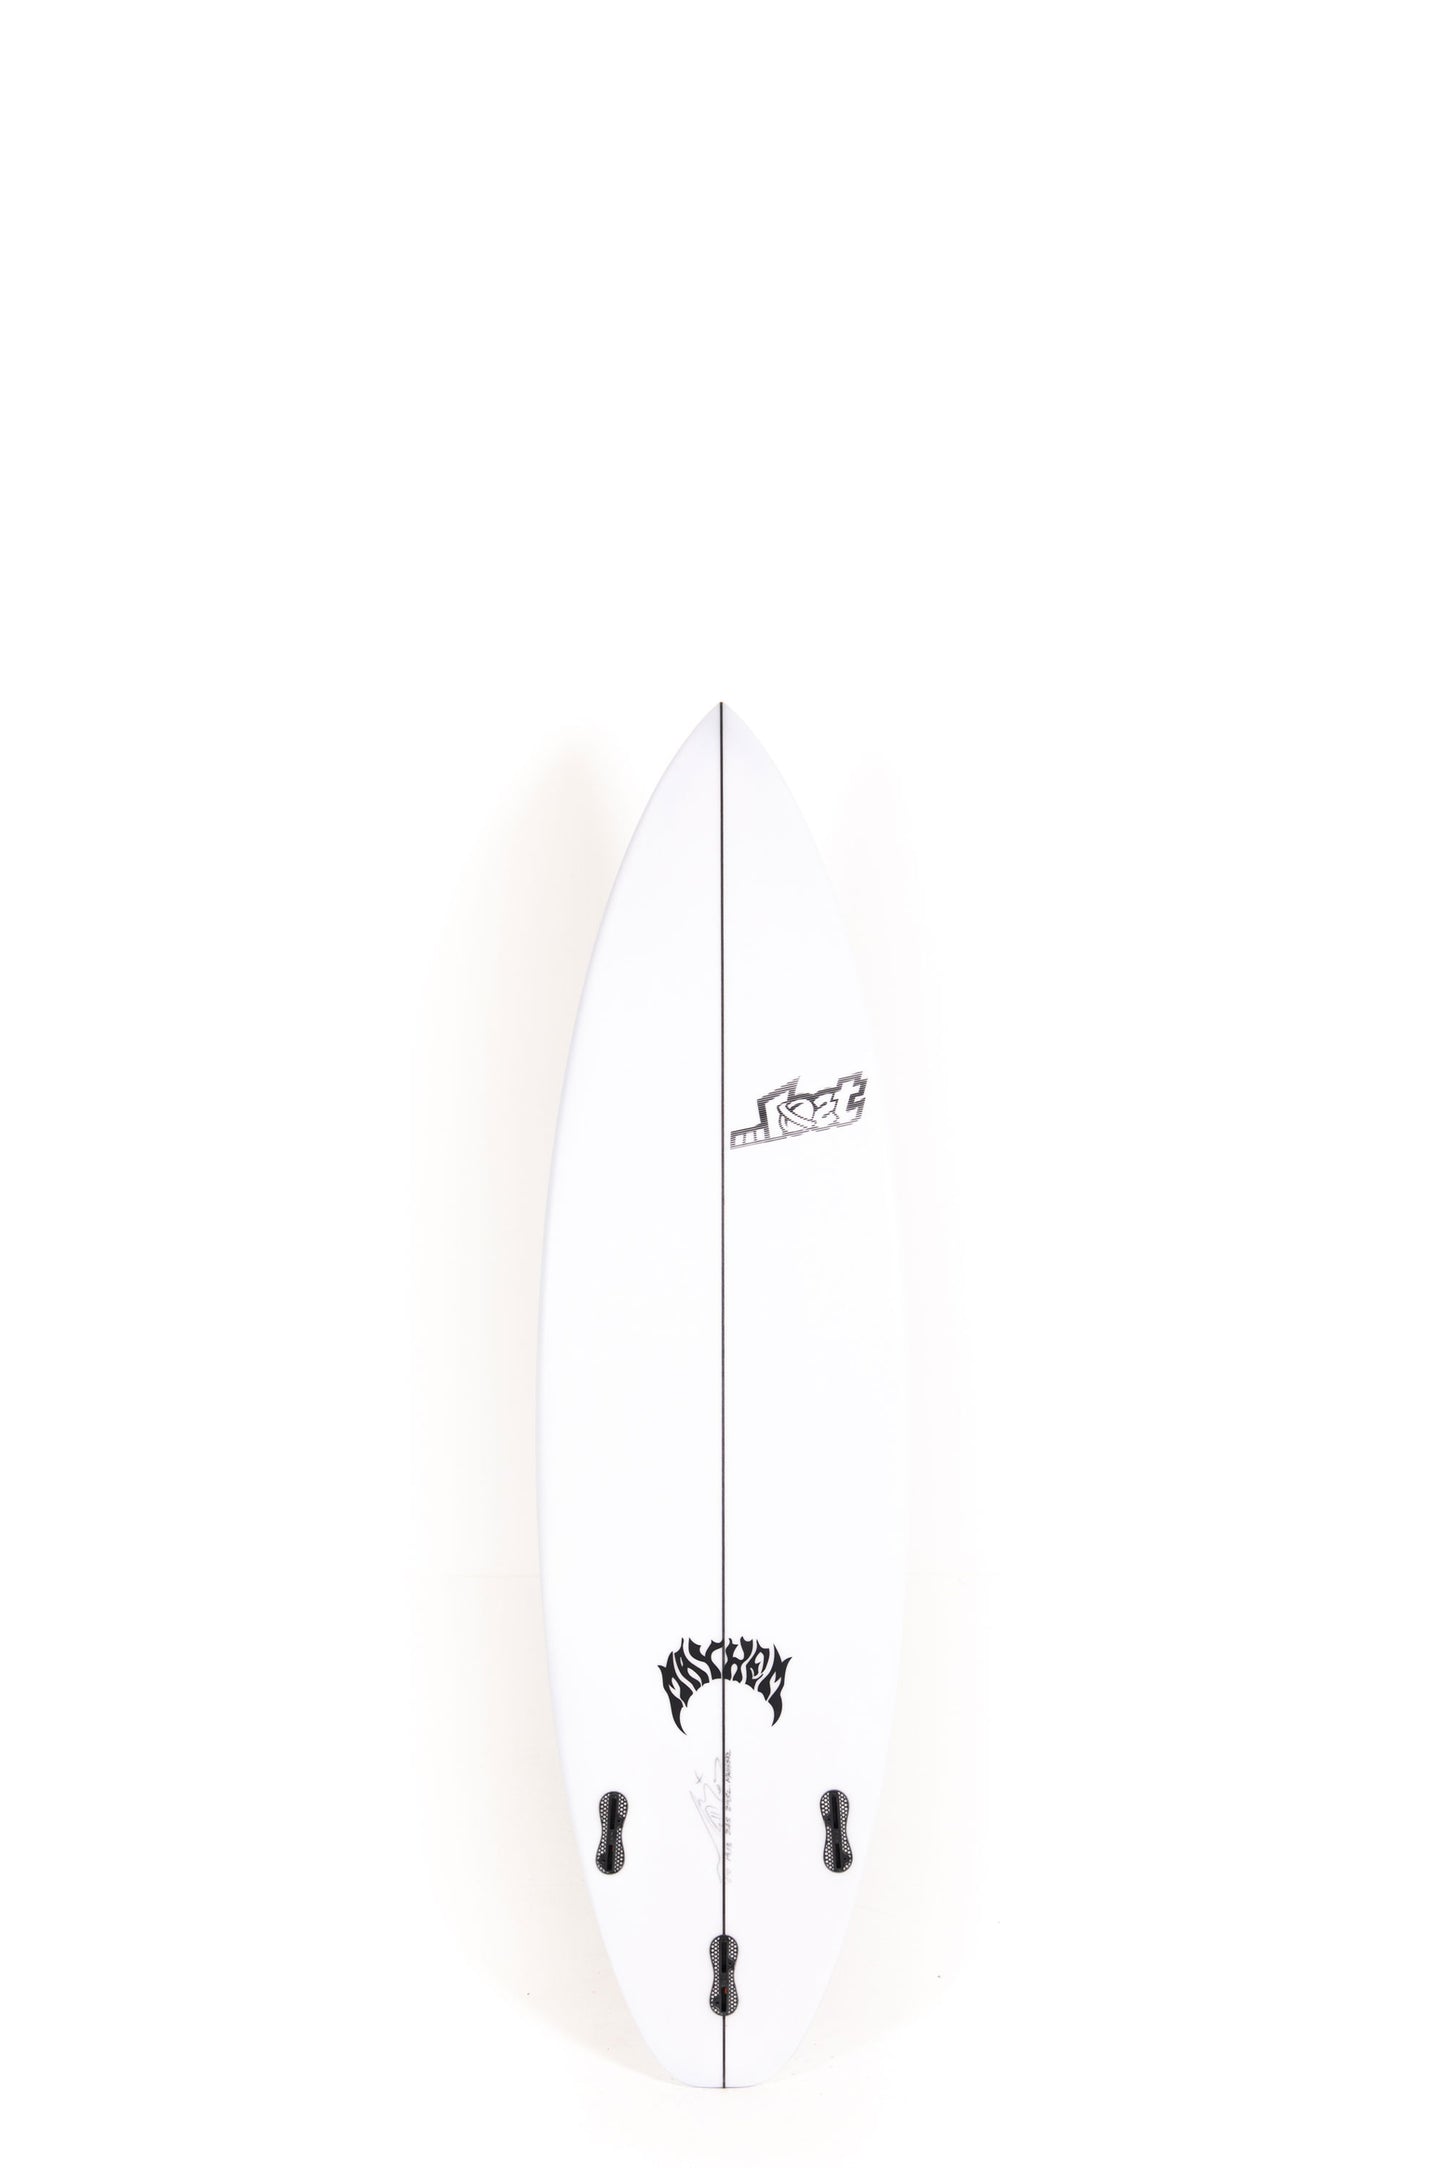 Pukas Surf Shop - Lost Surfboards - DRIVER 3.0 by Matt Biolos - 6'0" x 19,13 x 2,45 - 29,55L - MH18872